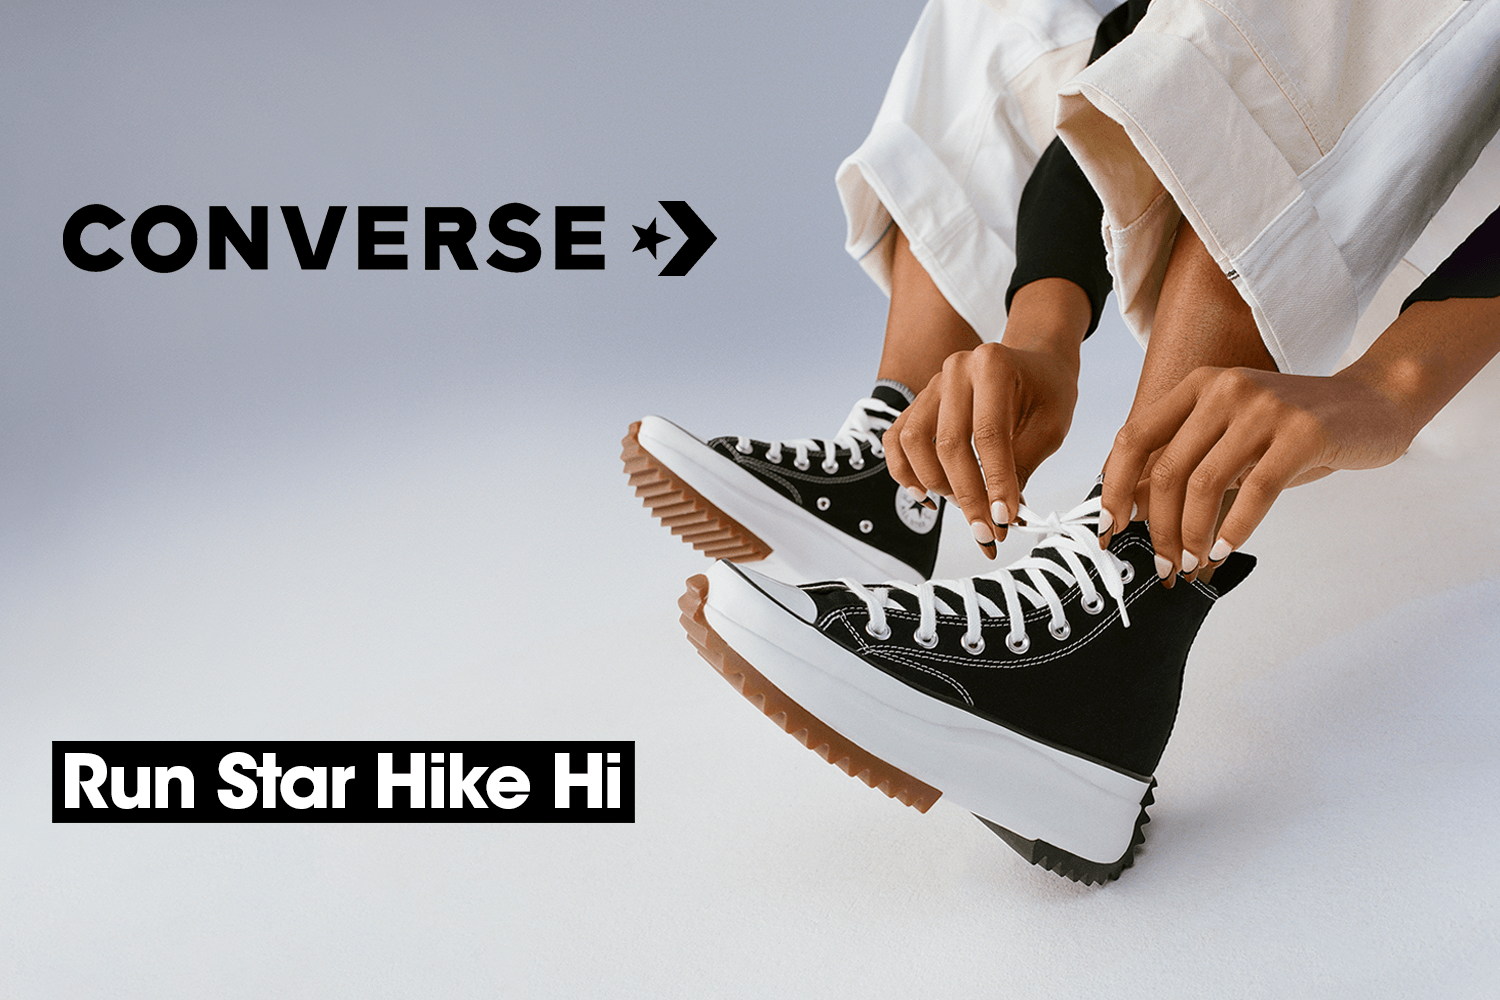 De Converse Run Star Hike is opnieuw verkrijgbaar